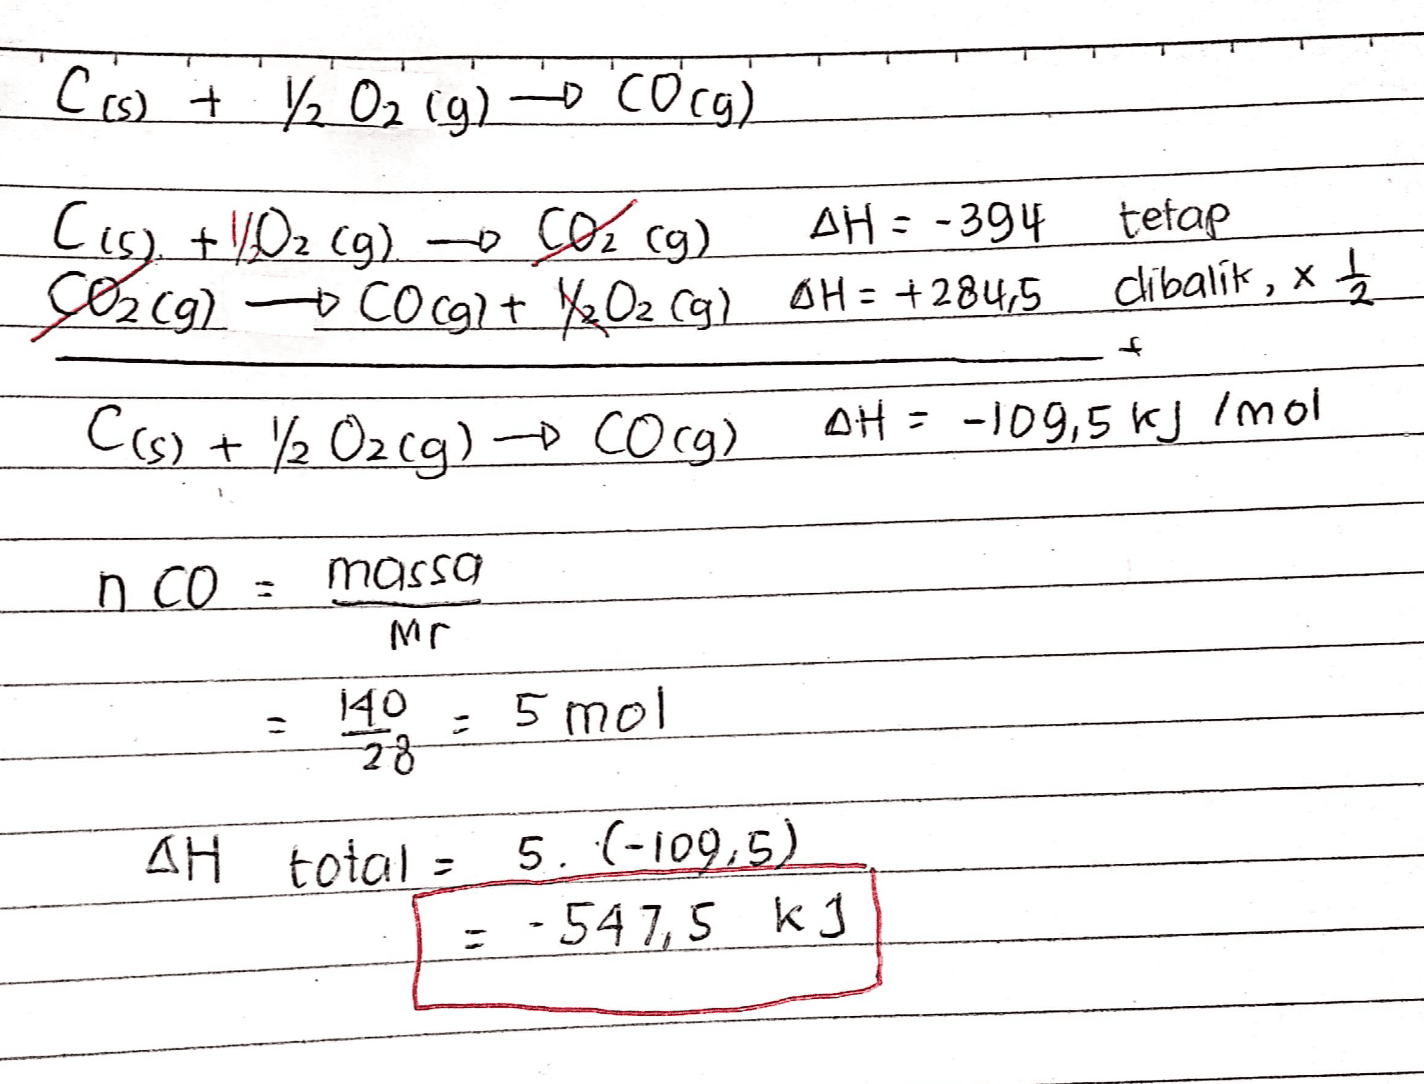 Collcg) Cos) + 12 02 (g) -- Corg) Cig. + O2(g) - AH = -394 tetap ços (9) Cocg) + X2O2(g) OH = +284,5 clibalik, x 5 Co + /2O2(g) → COcg) OH = -109,5 kg /mol 4 ОСО massa Mc 140 28 5 mol AH total = 5.(-109,5) = -547,5 kg 